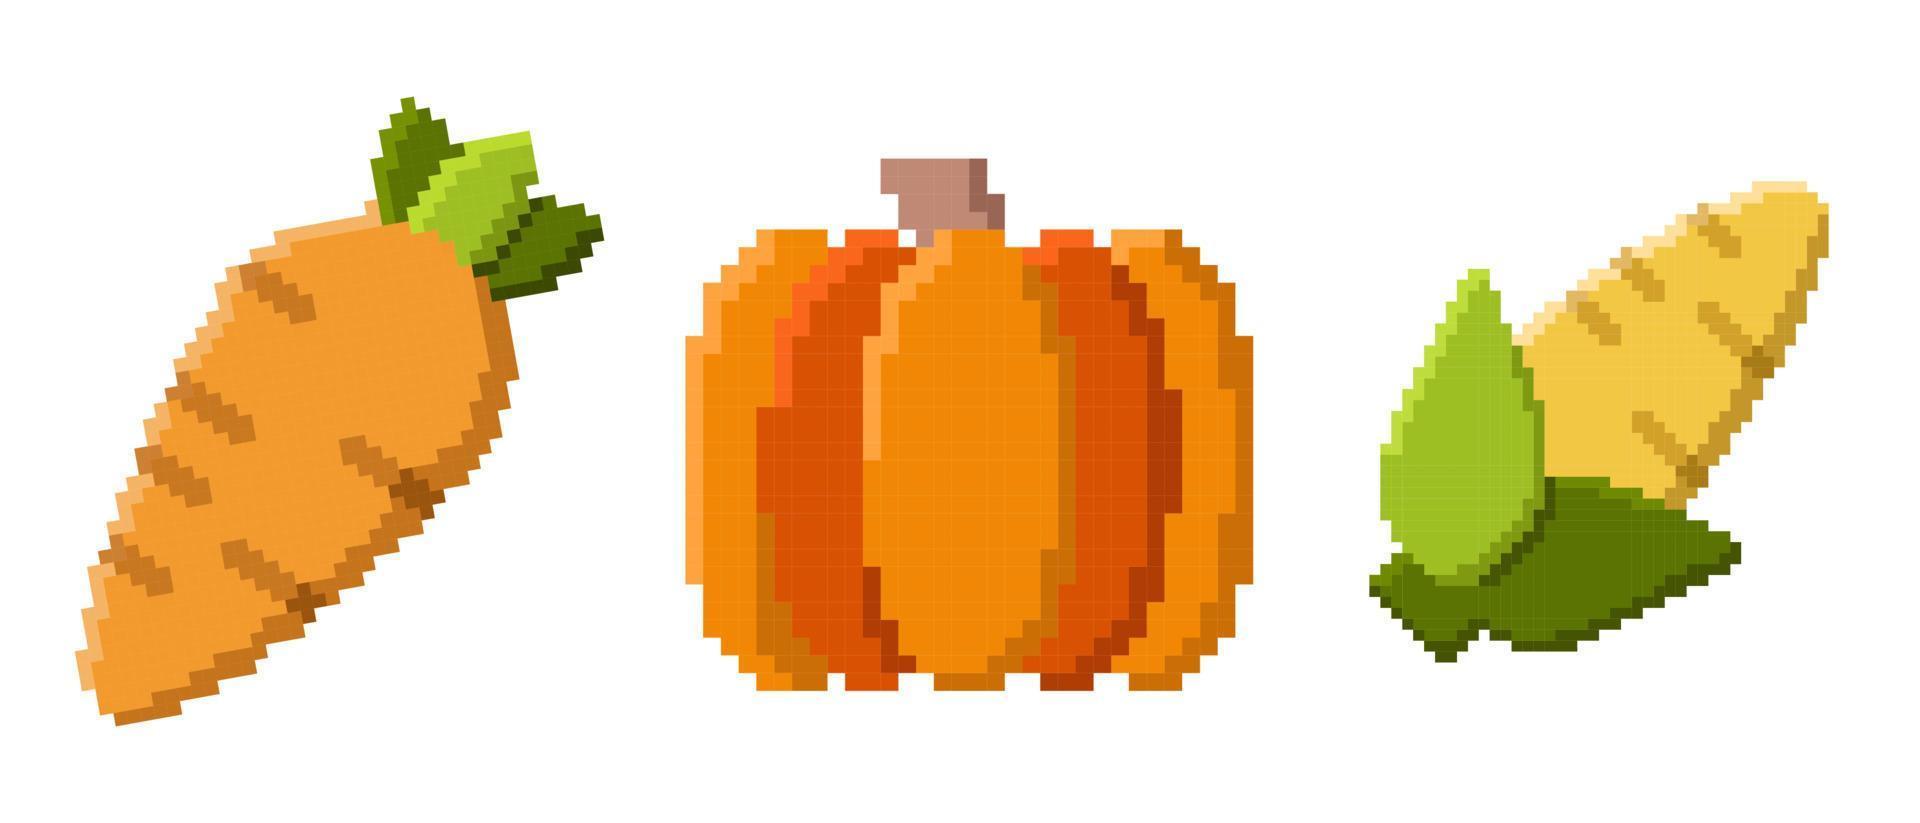 Pixelkunst-Symbol. Pixelkunst-Gemüse-Symbol. süßes Pixelgemüse. 8-Bit-Pixel-Gemüse. Computergrafikstil der alten Schule. Vektor-Illustration vektor